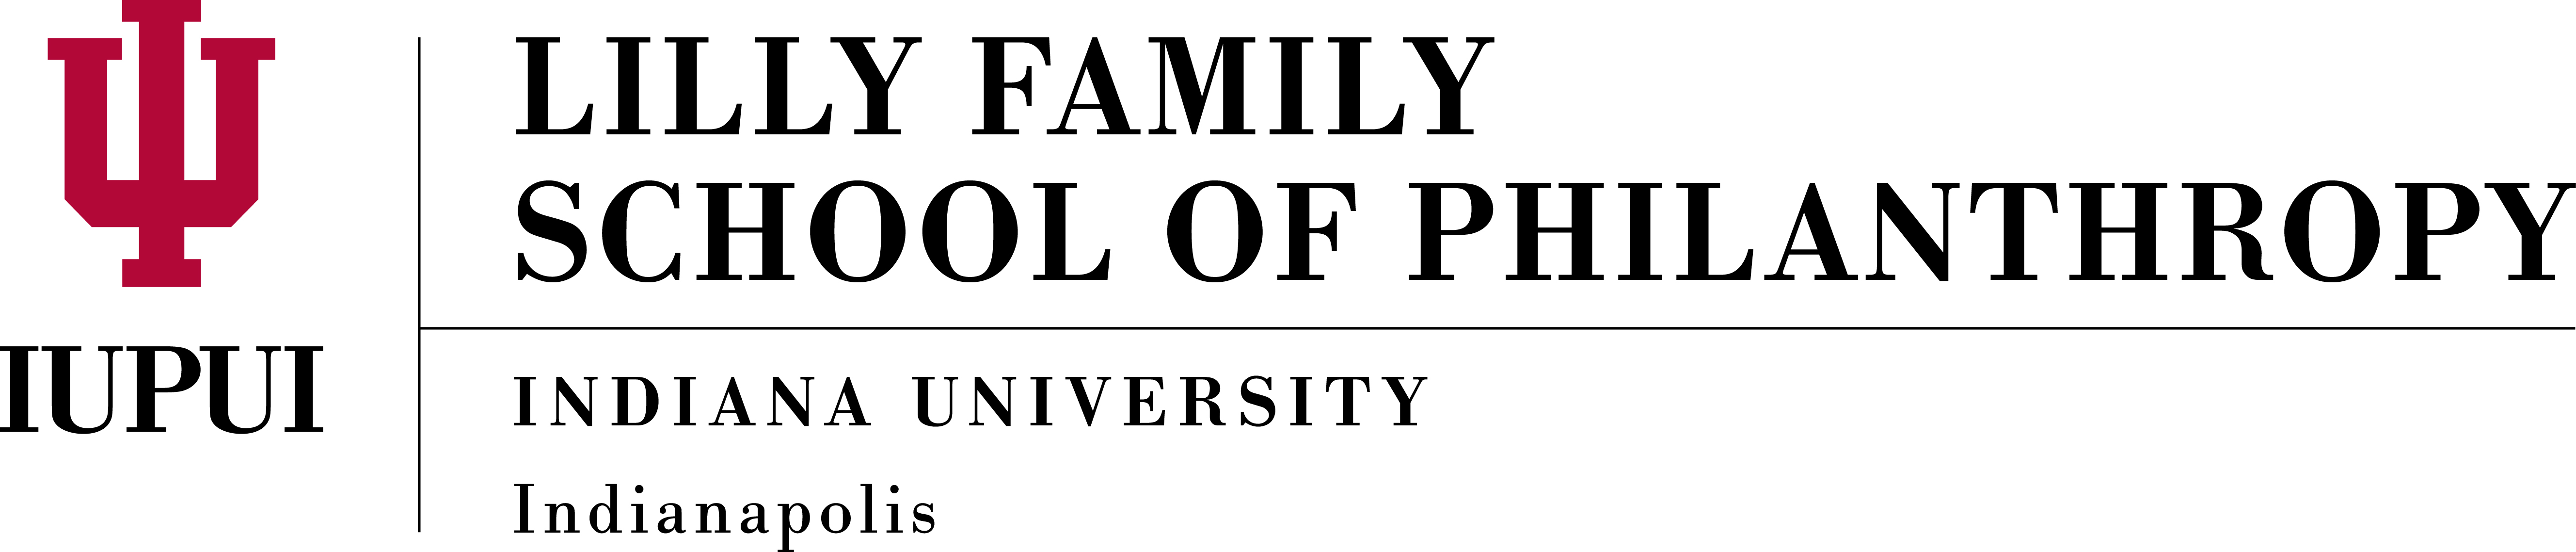 IUPUI (Indiana University Lilly Family School of Philanthropy)